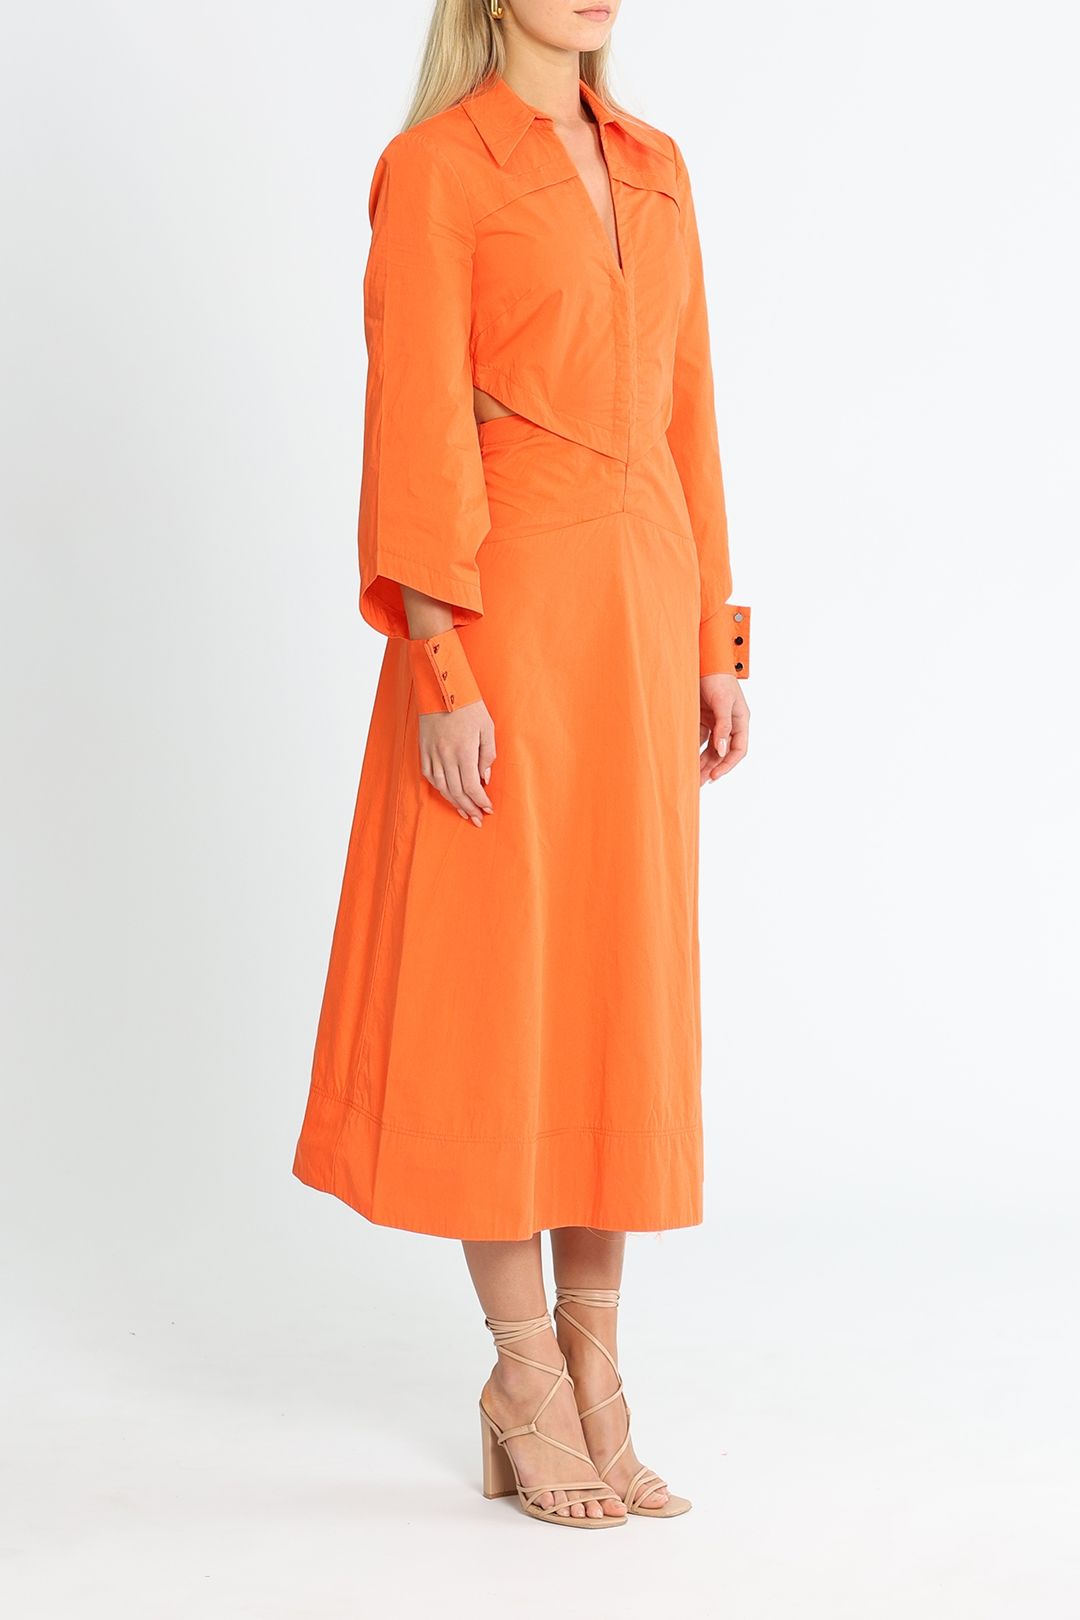 Hire Cotton Cut Out Shirt Dress in Orange | Cue | GlamCorner